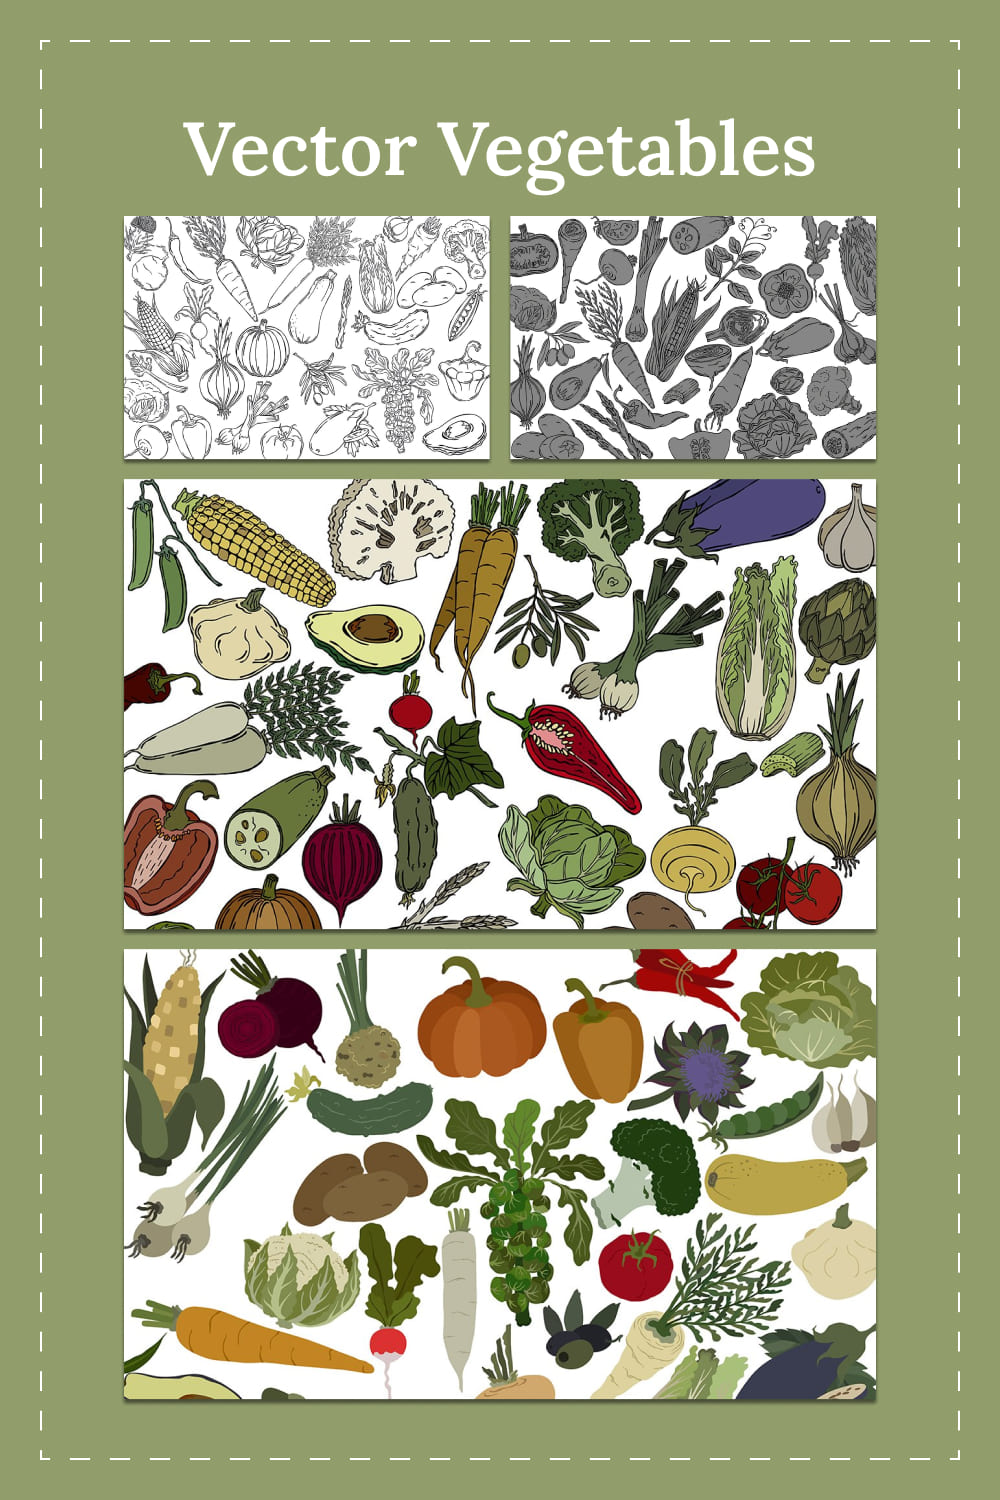 Vector vegetables - pinterest image preview.